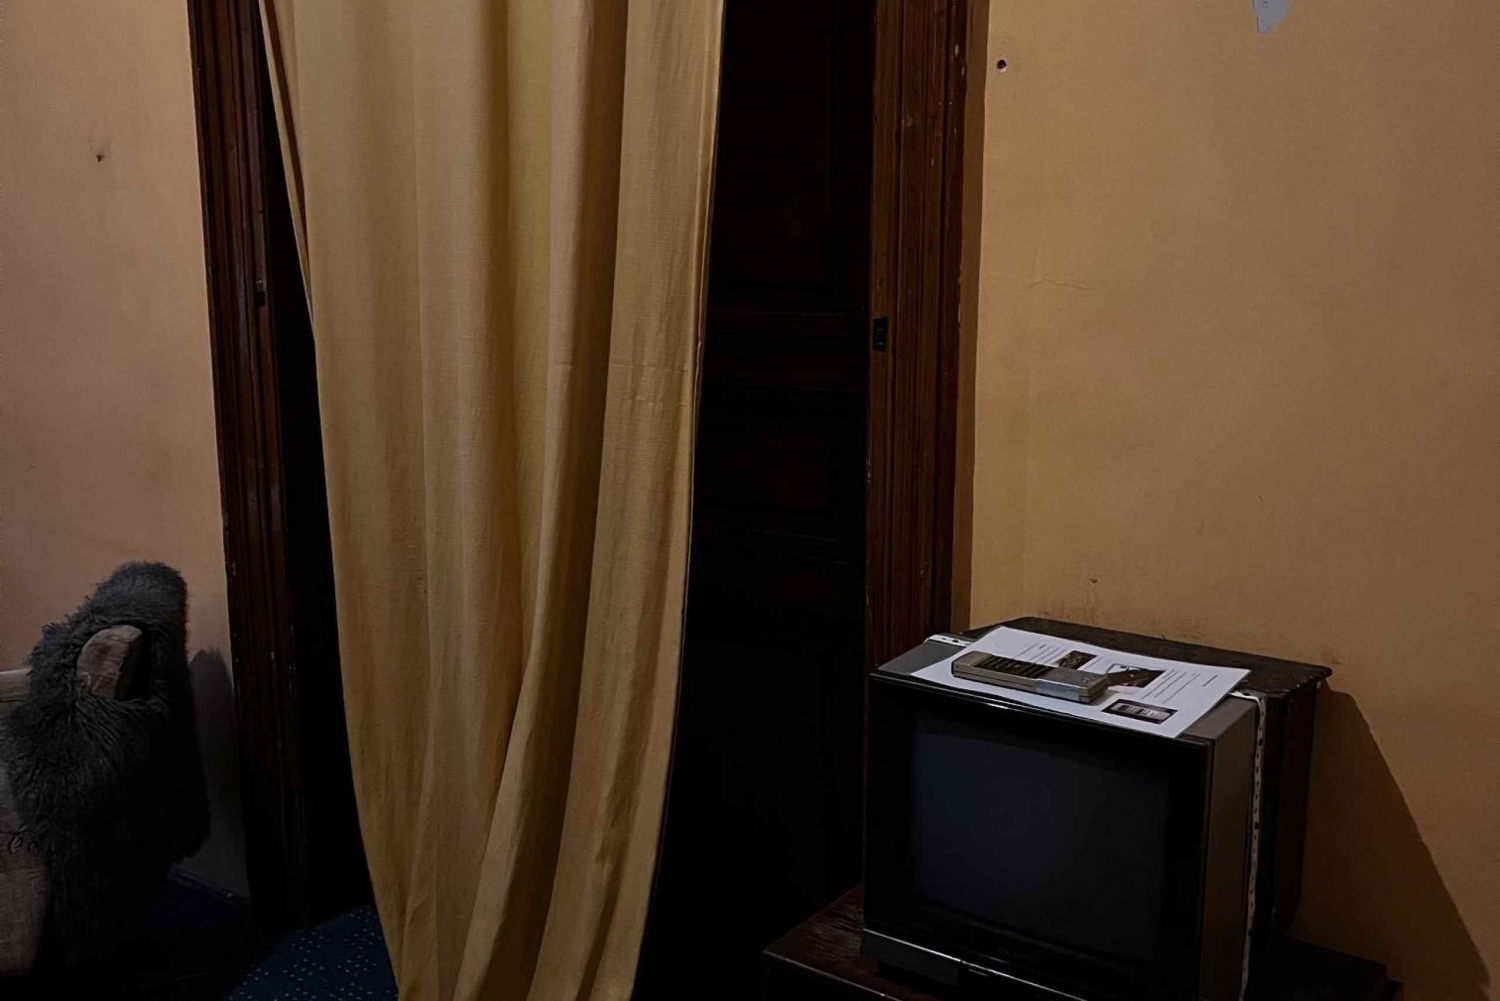 Krakow: Das Motel Escape Room Game with Free Shots